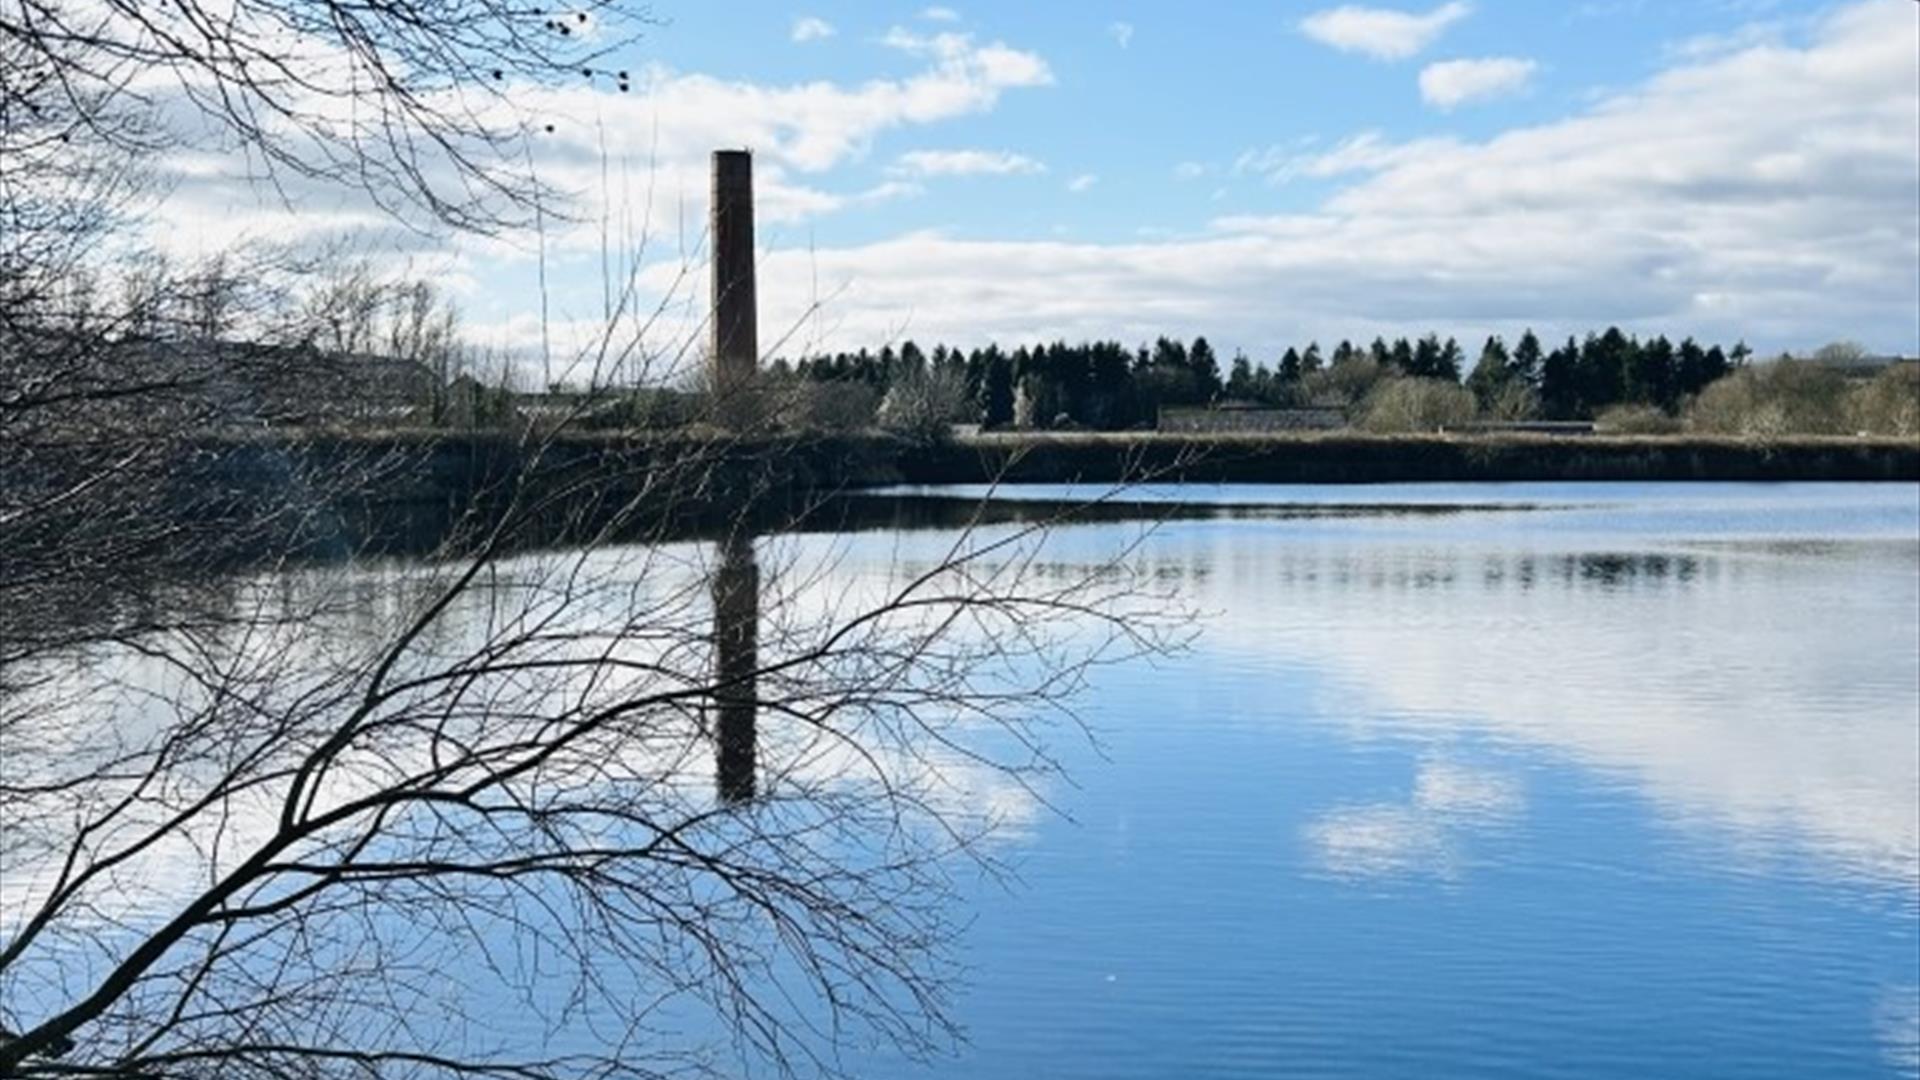 Image overlooking a lake